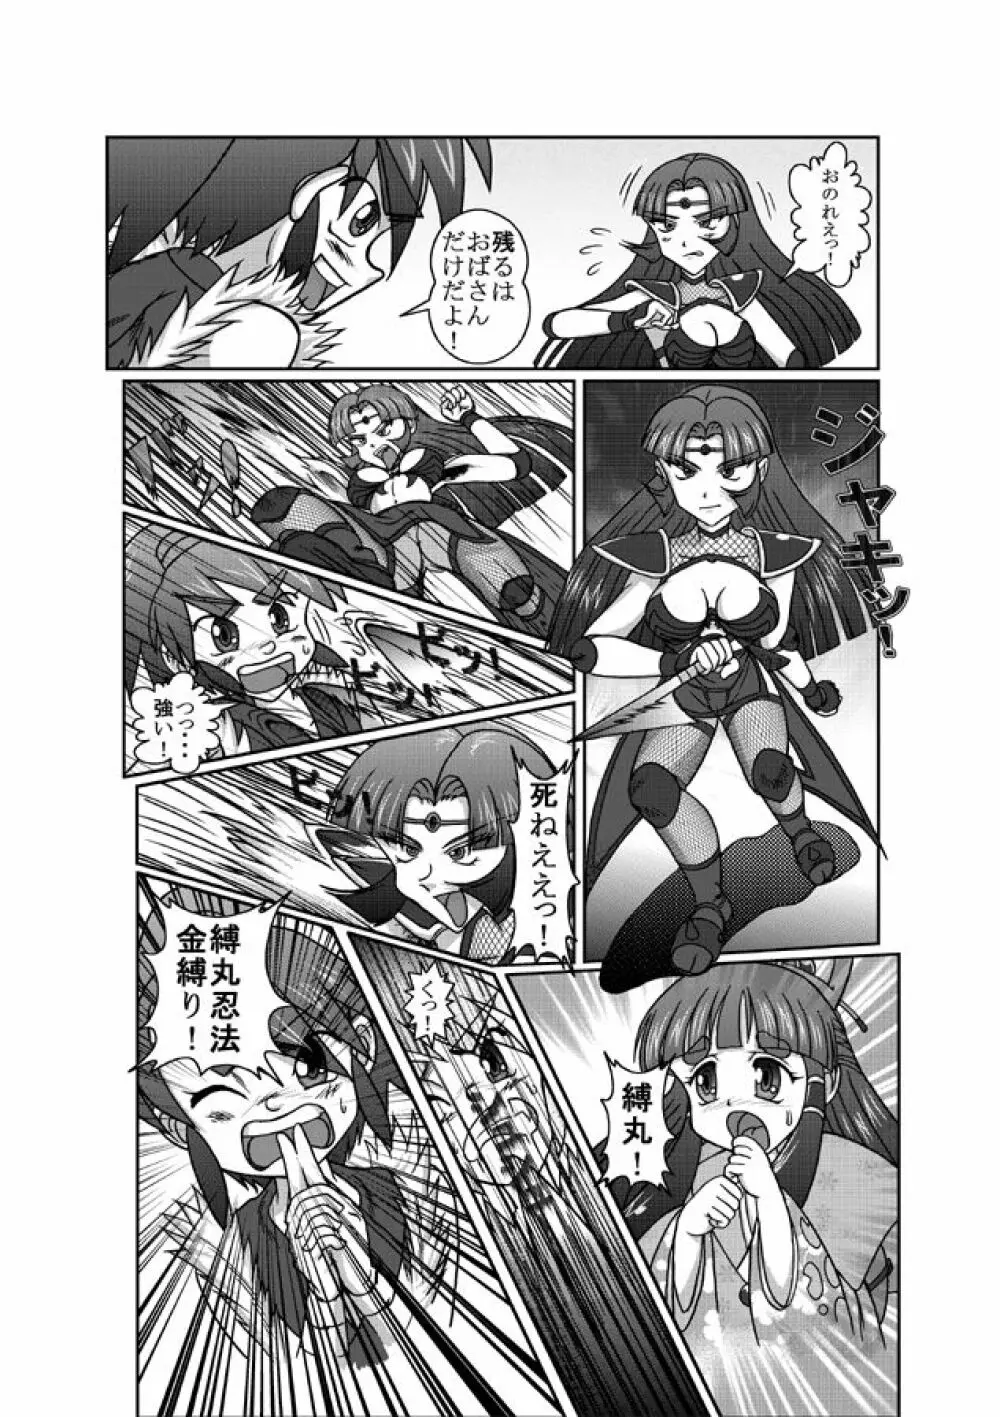 Same-themed manga about kid fighting female ninjas from japanese imageboard. 28ページ